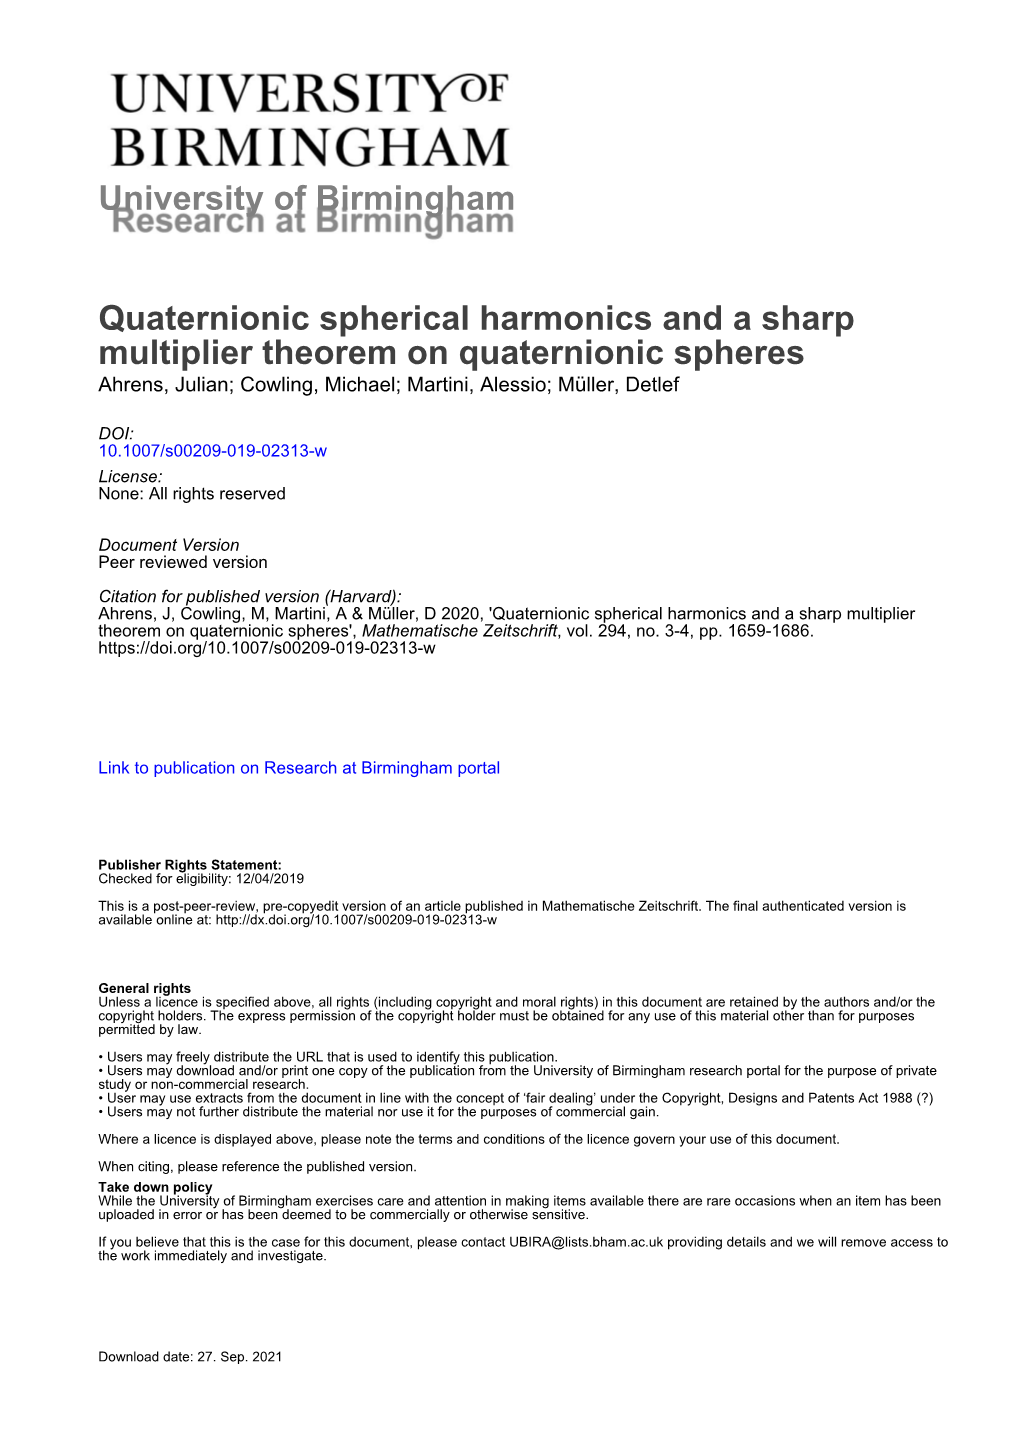 University of Birmingham Quaternionic Spherical Harmonics and a Sharp